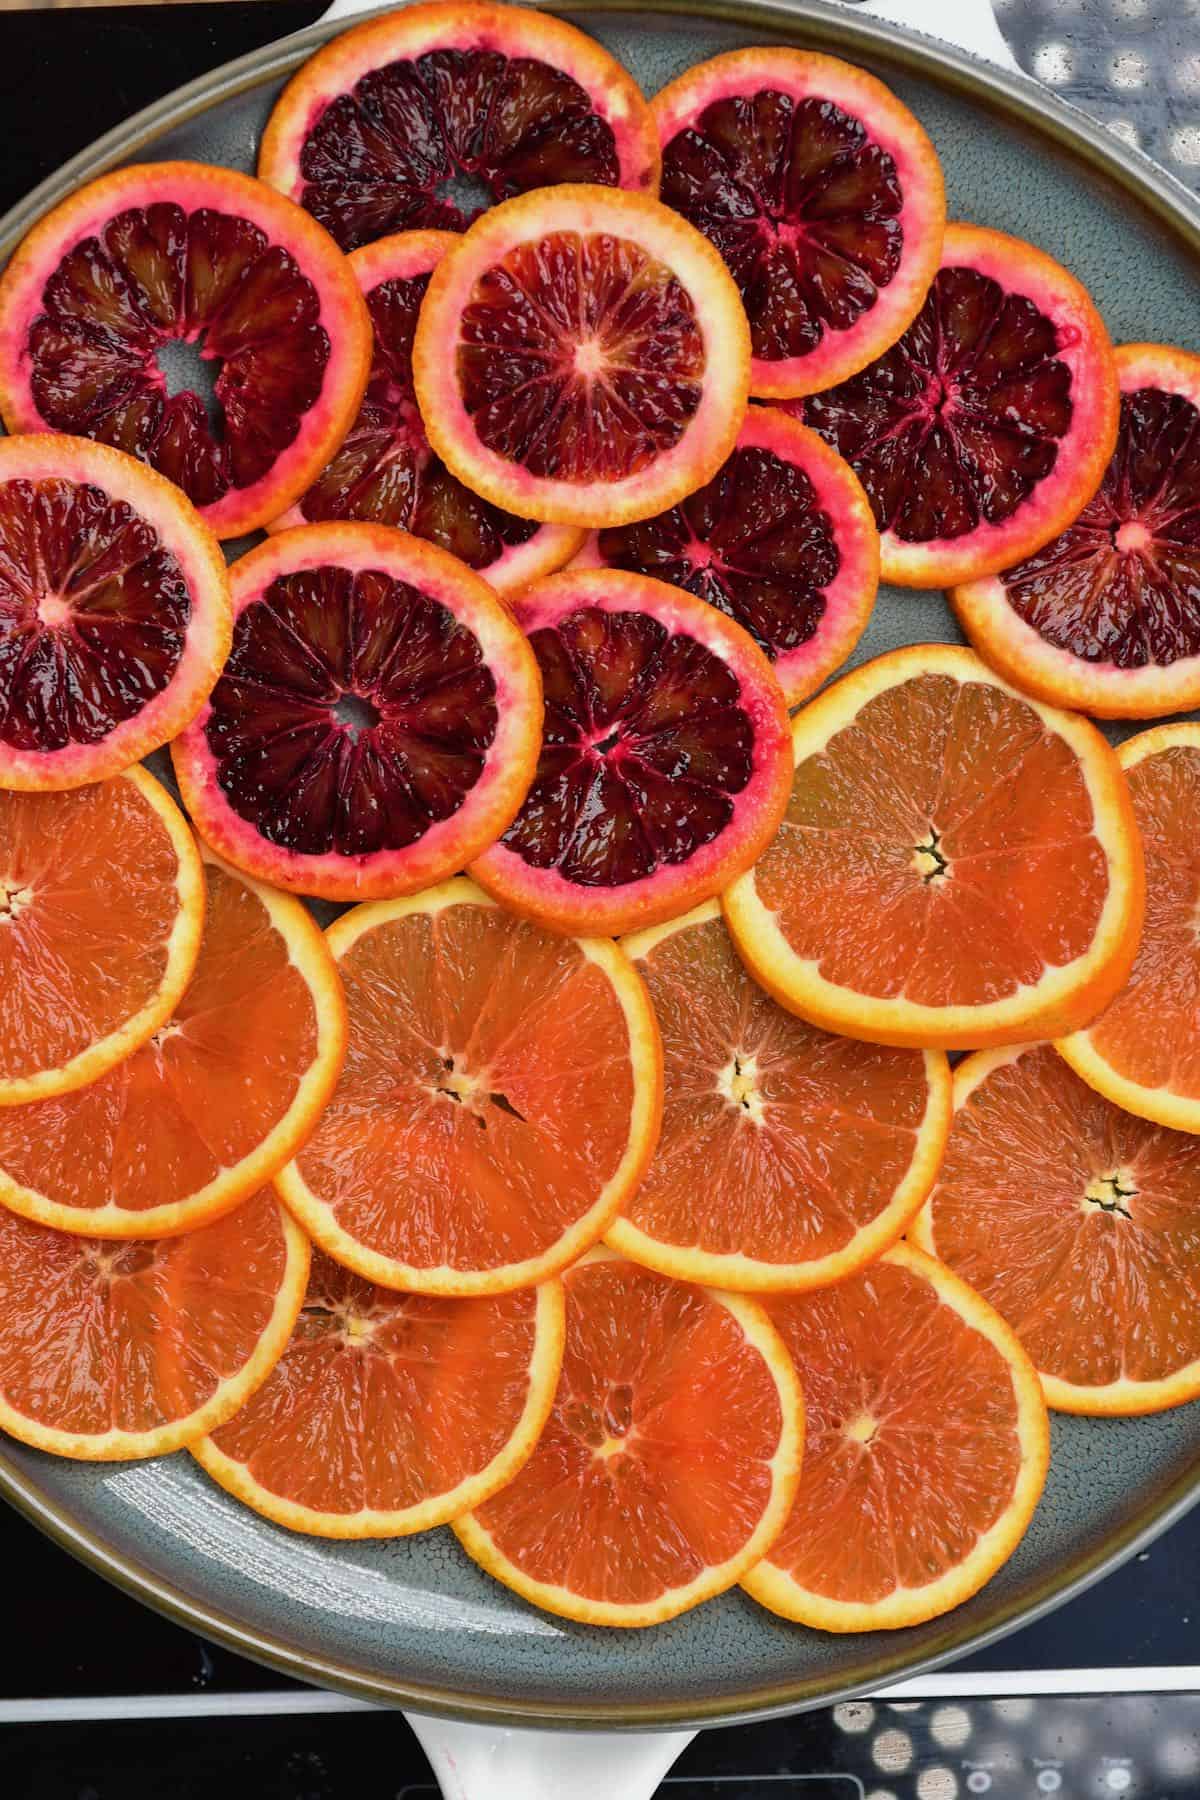 Orange slices on a plate